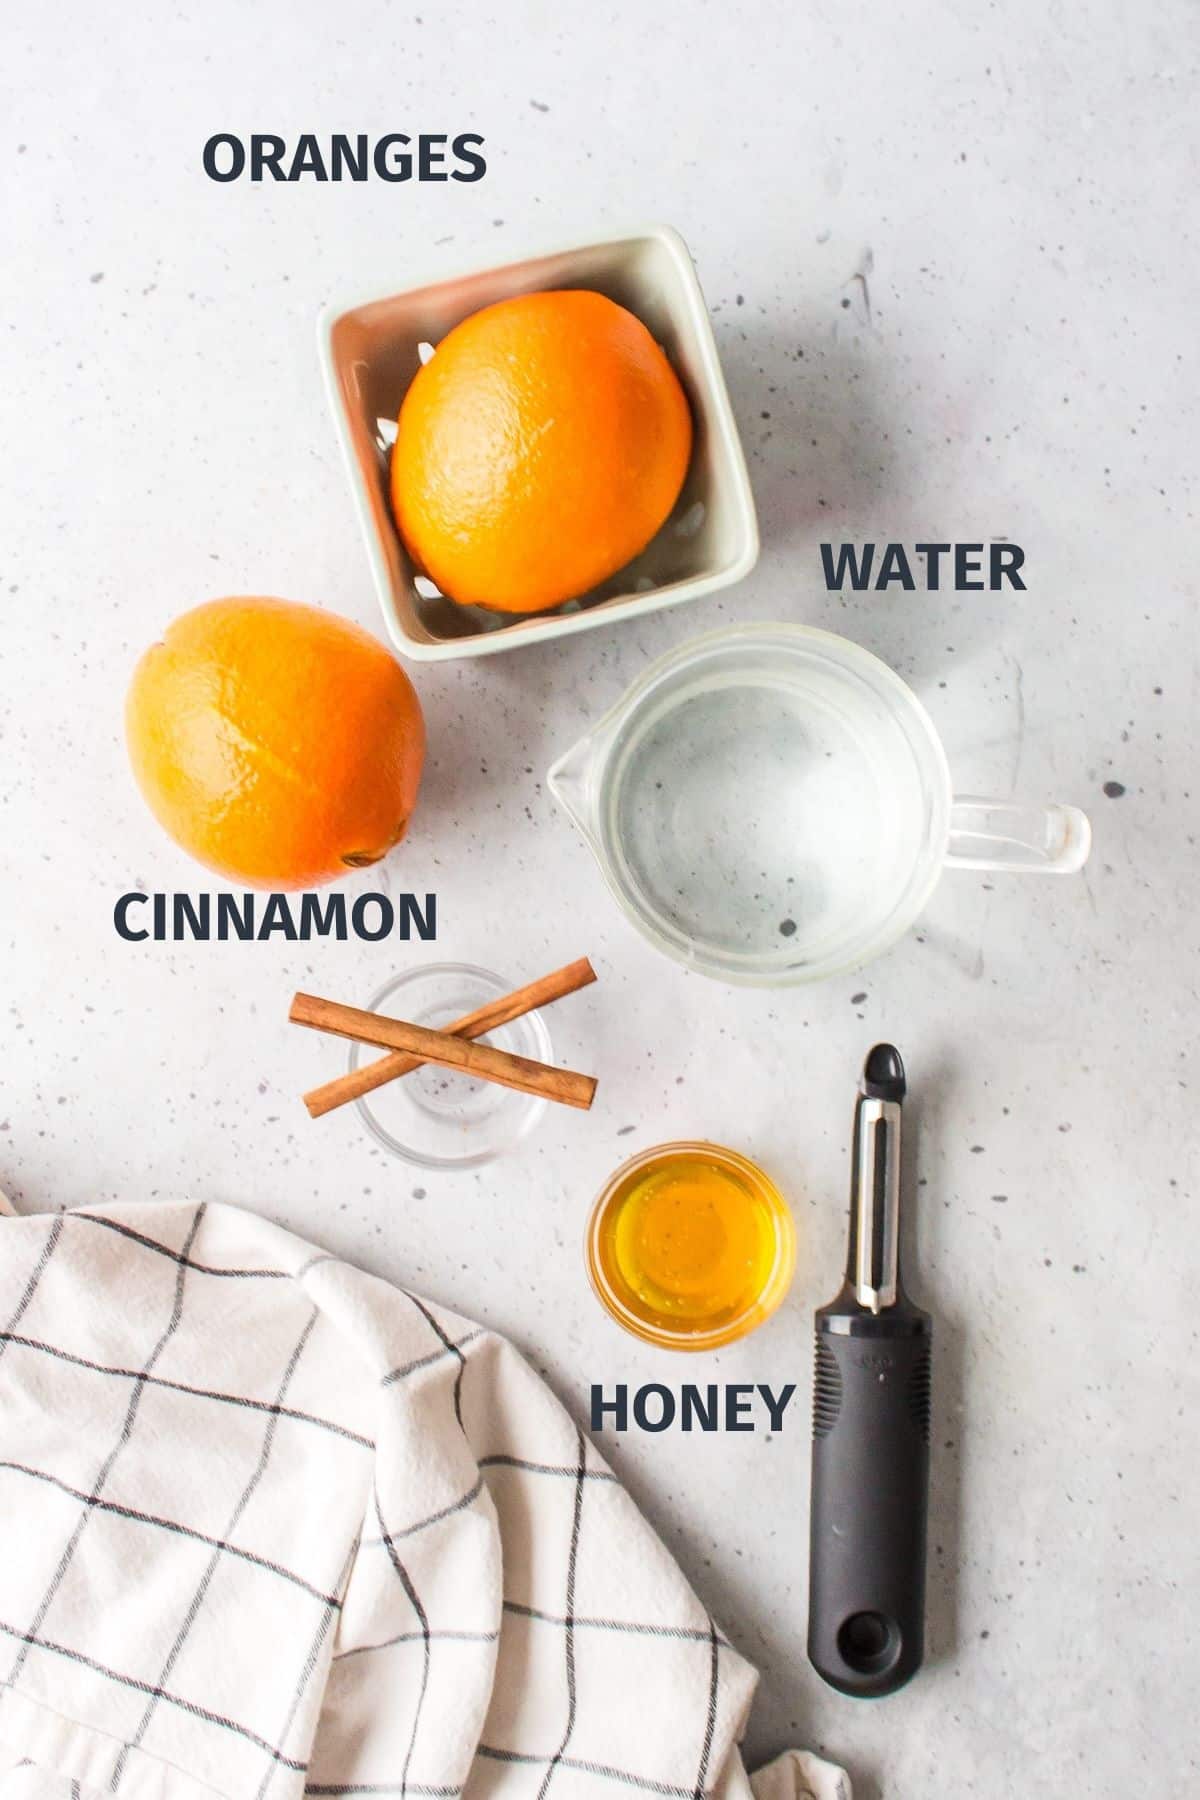 ingredients for orange peel tea on a countertop.